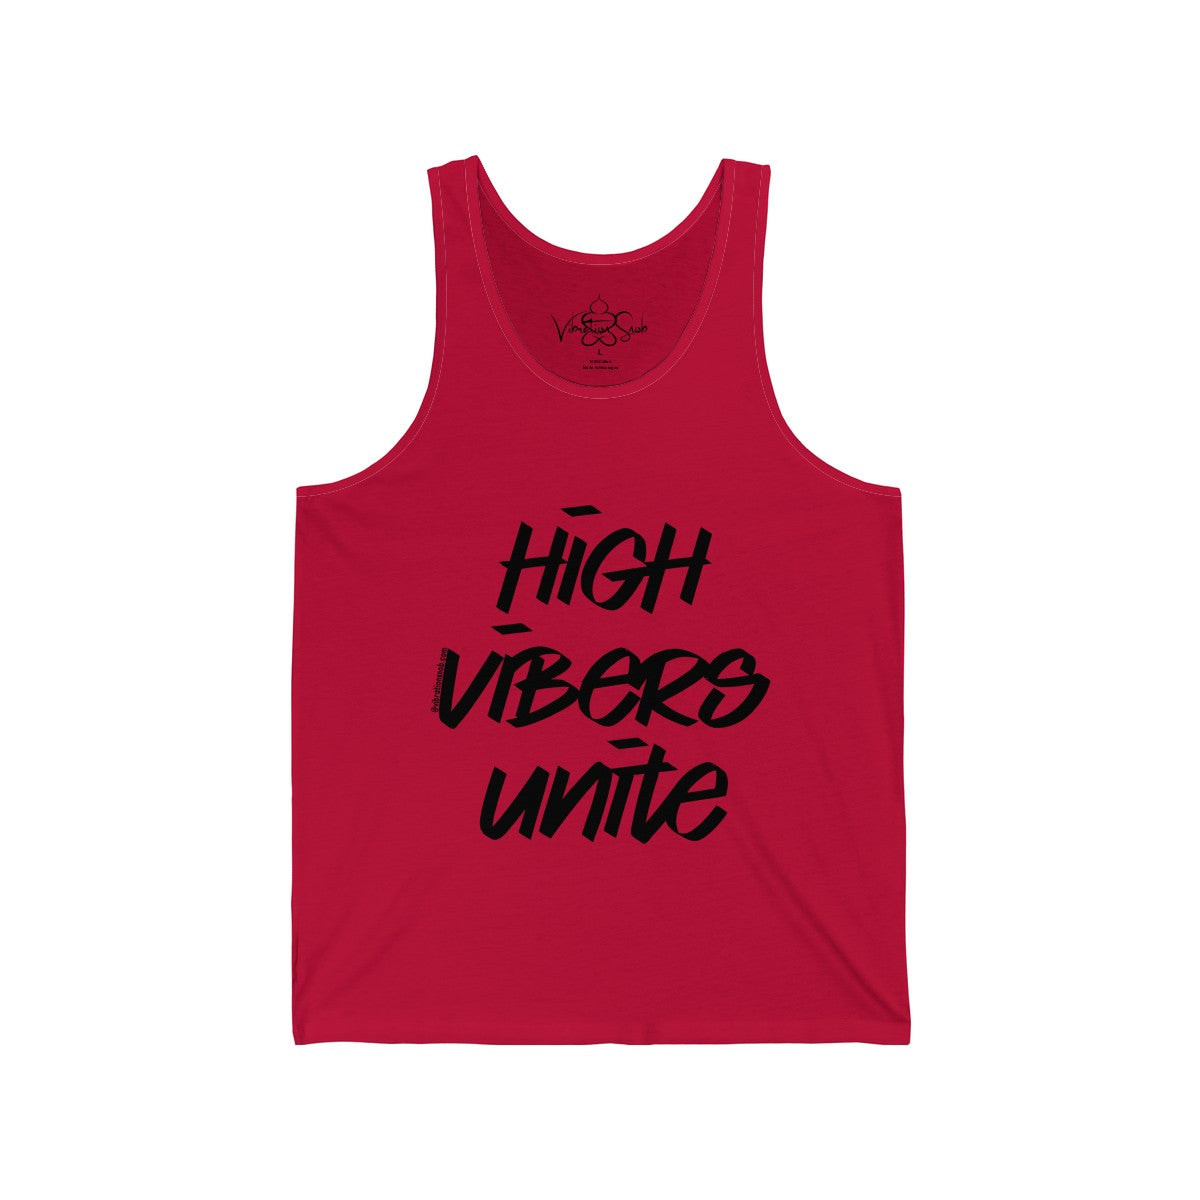 High Vibers Unite - Men's Jersey Tank